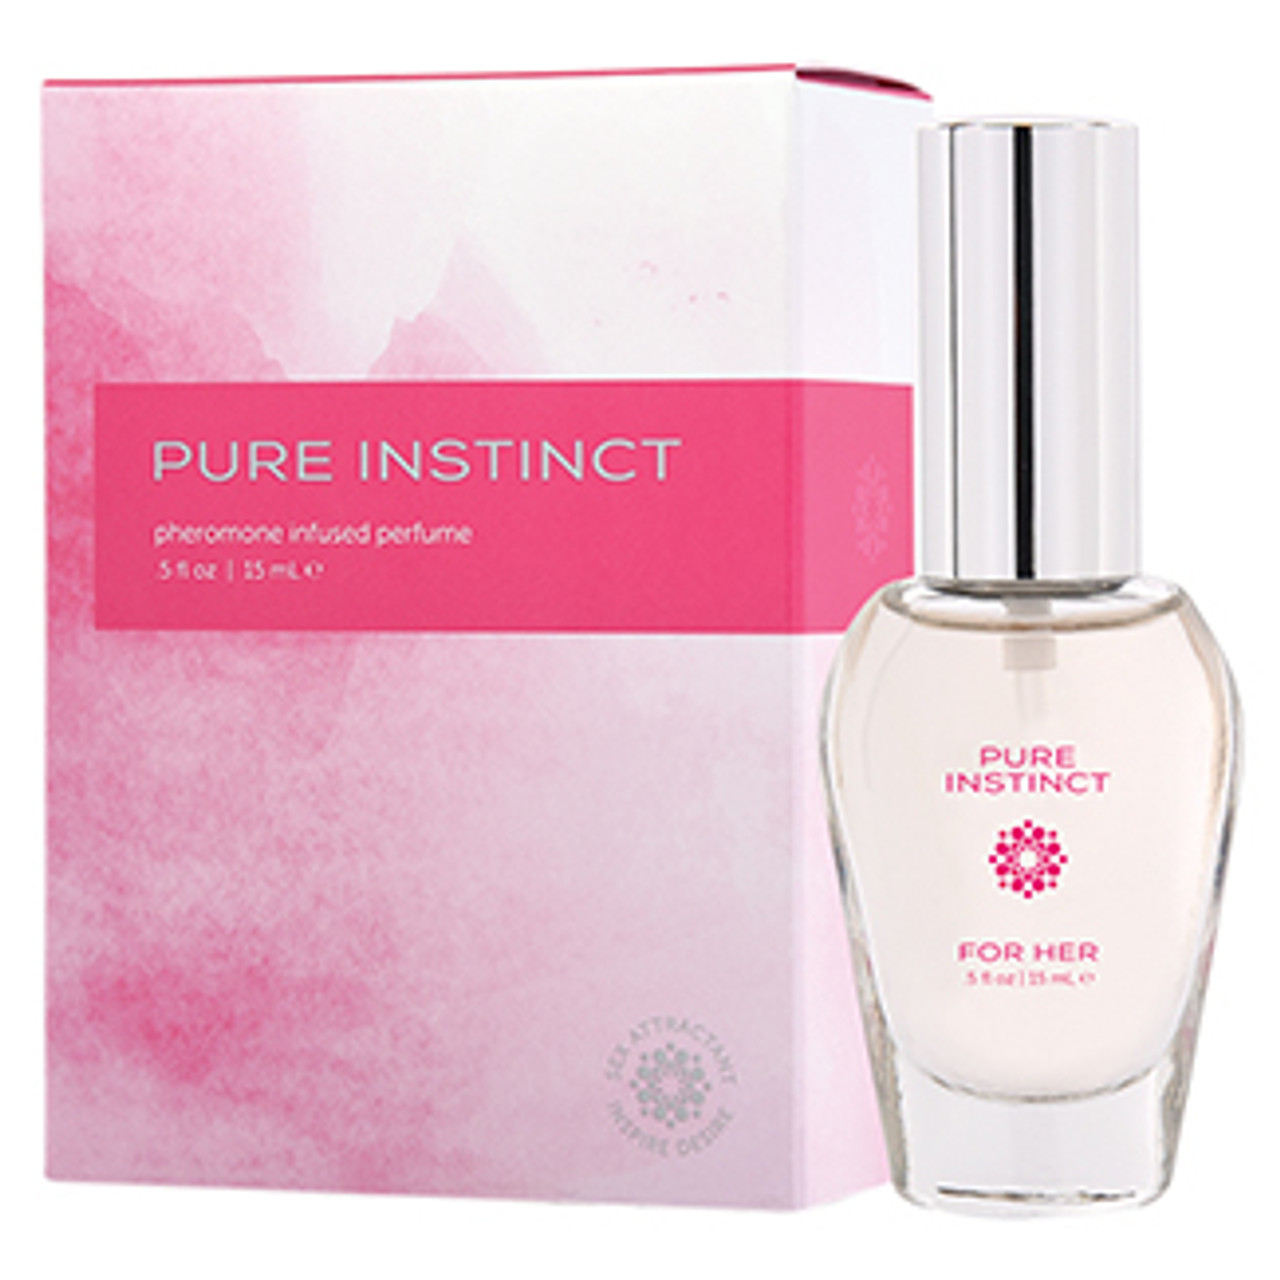 Pure Instinct Pheromone Perfume Oil Roll on for Her .34oz